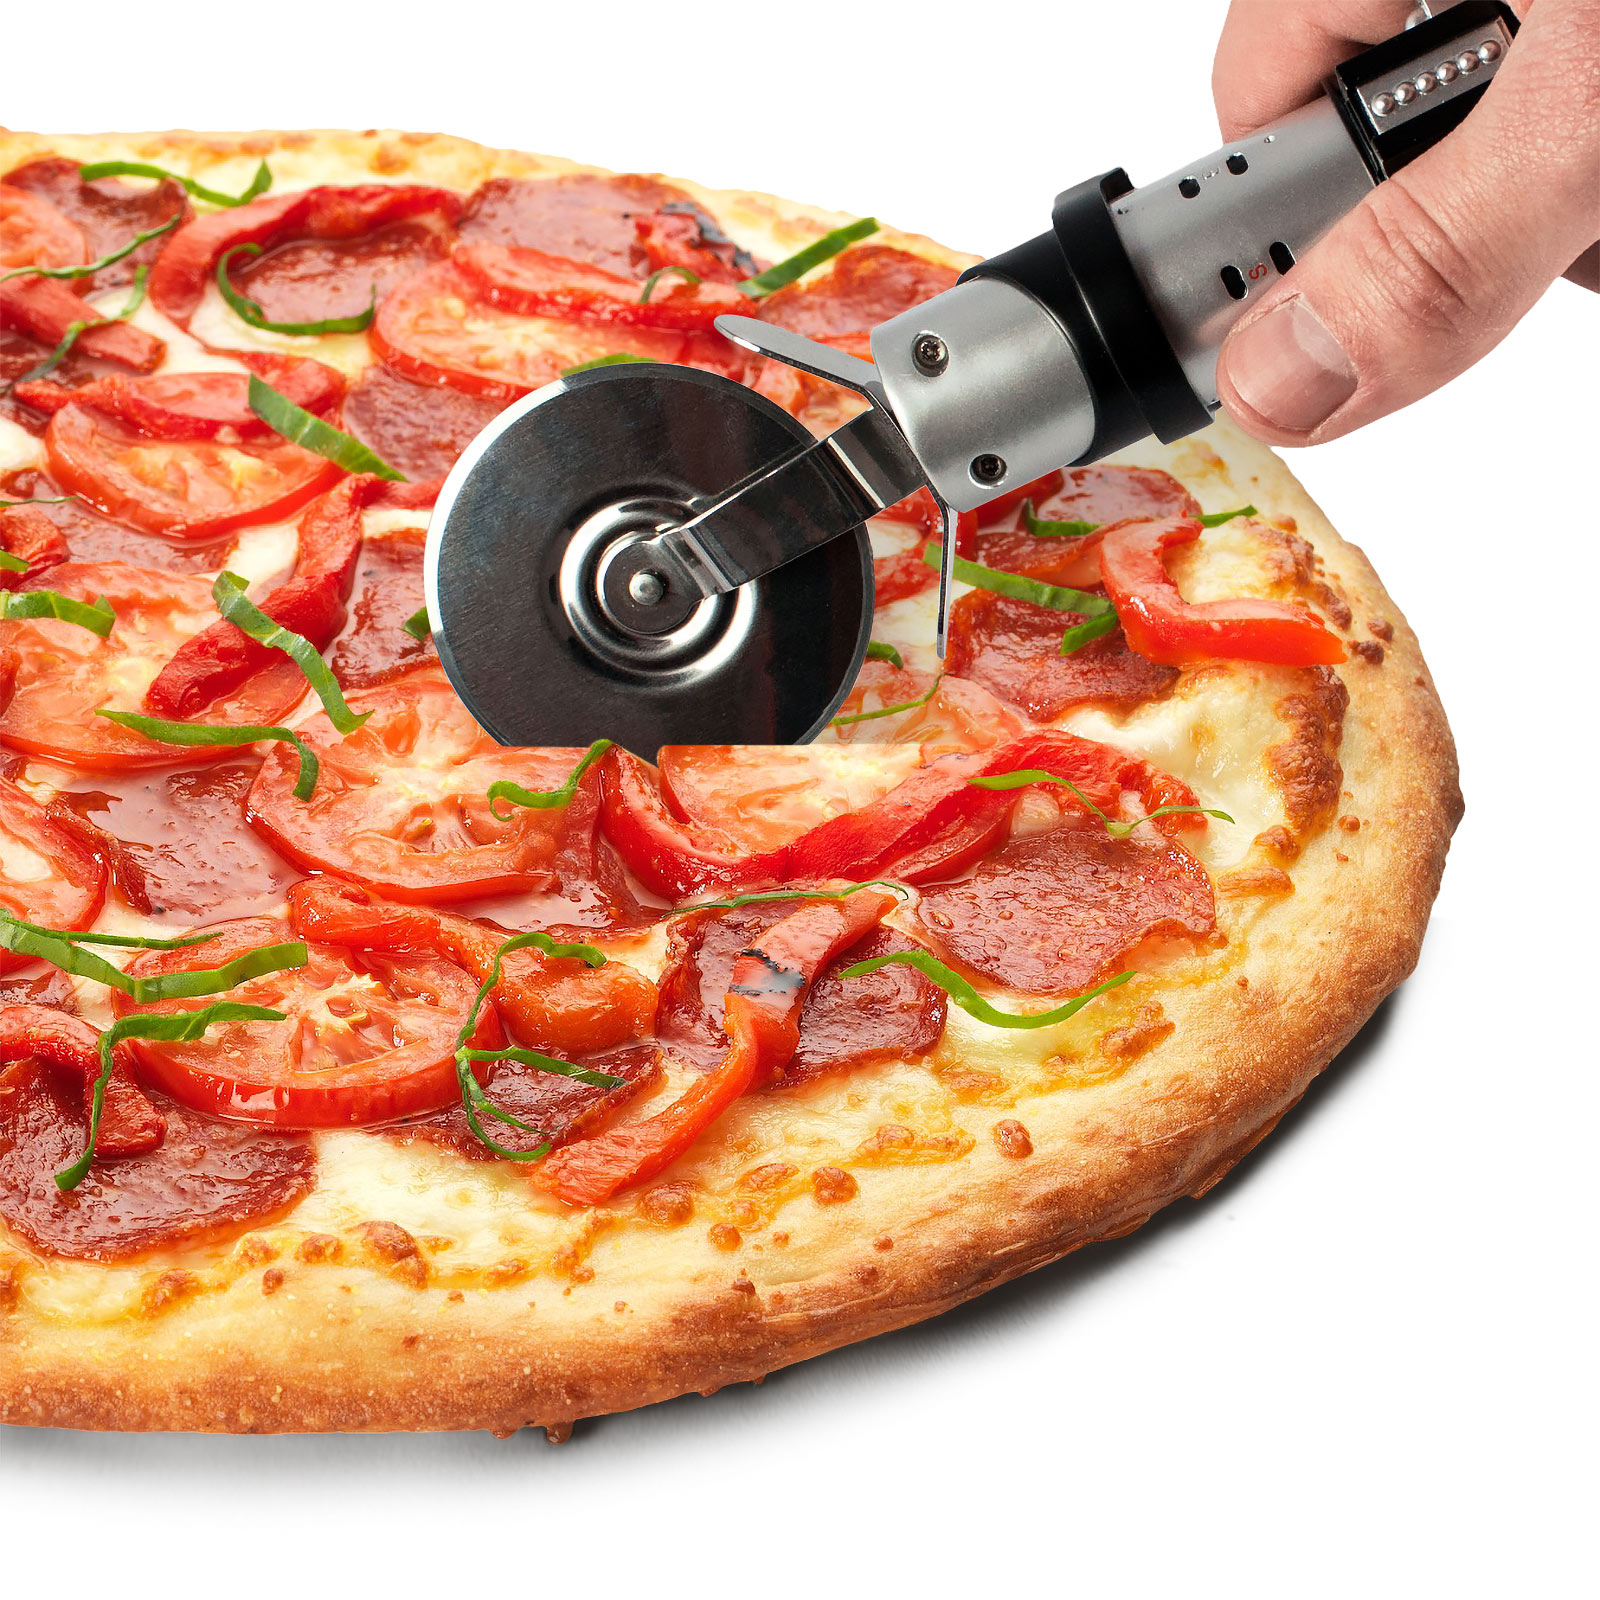 Star Wars - Coupe-pizza sabre laser de Darth Vader avec son